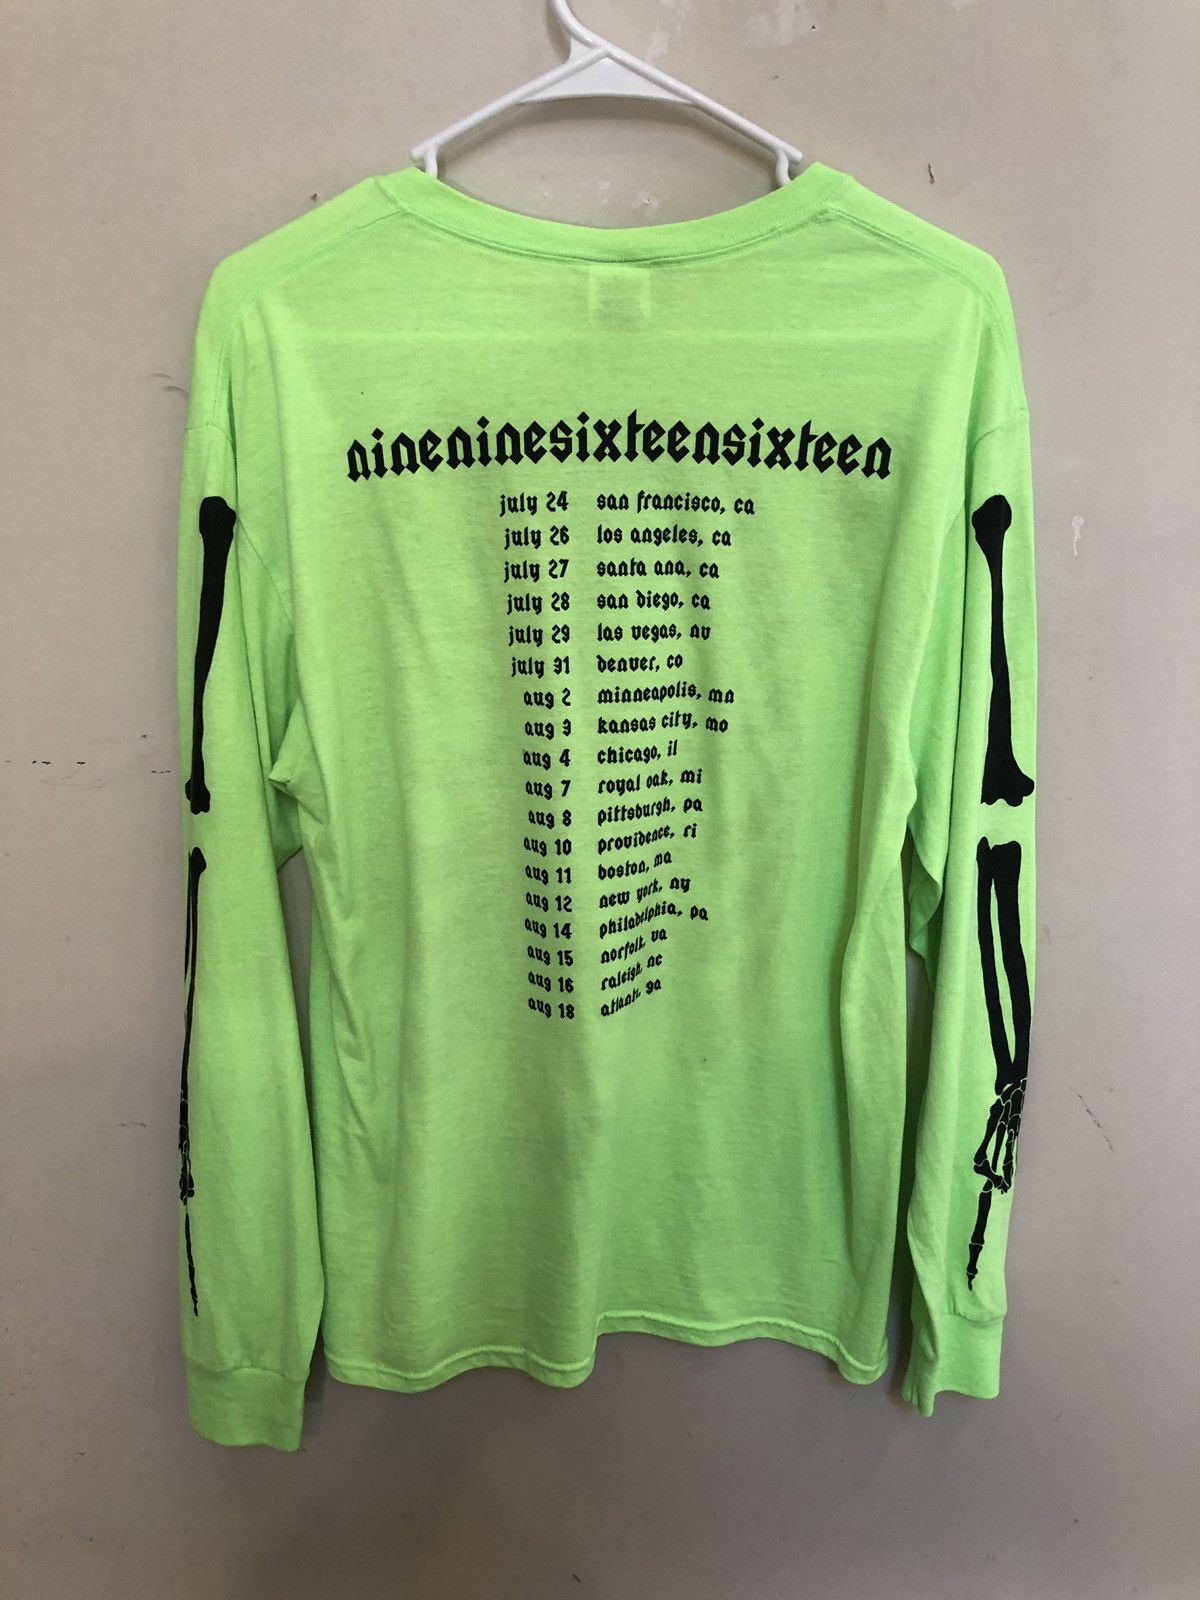 Vlone Playboi Carti Skeleton Die Lit Tour Shirt Size US M / EU 48-50 / 2 - 4 Thumbnail